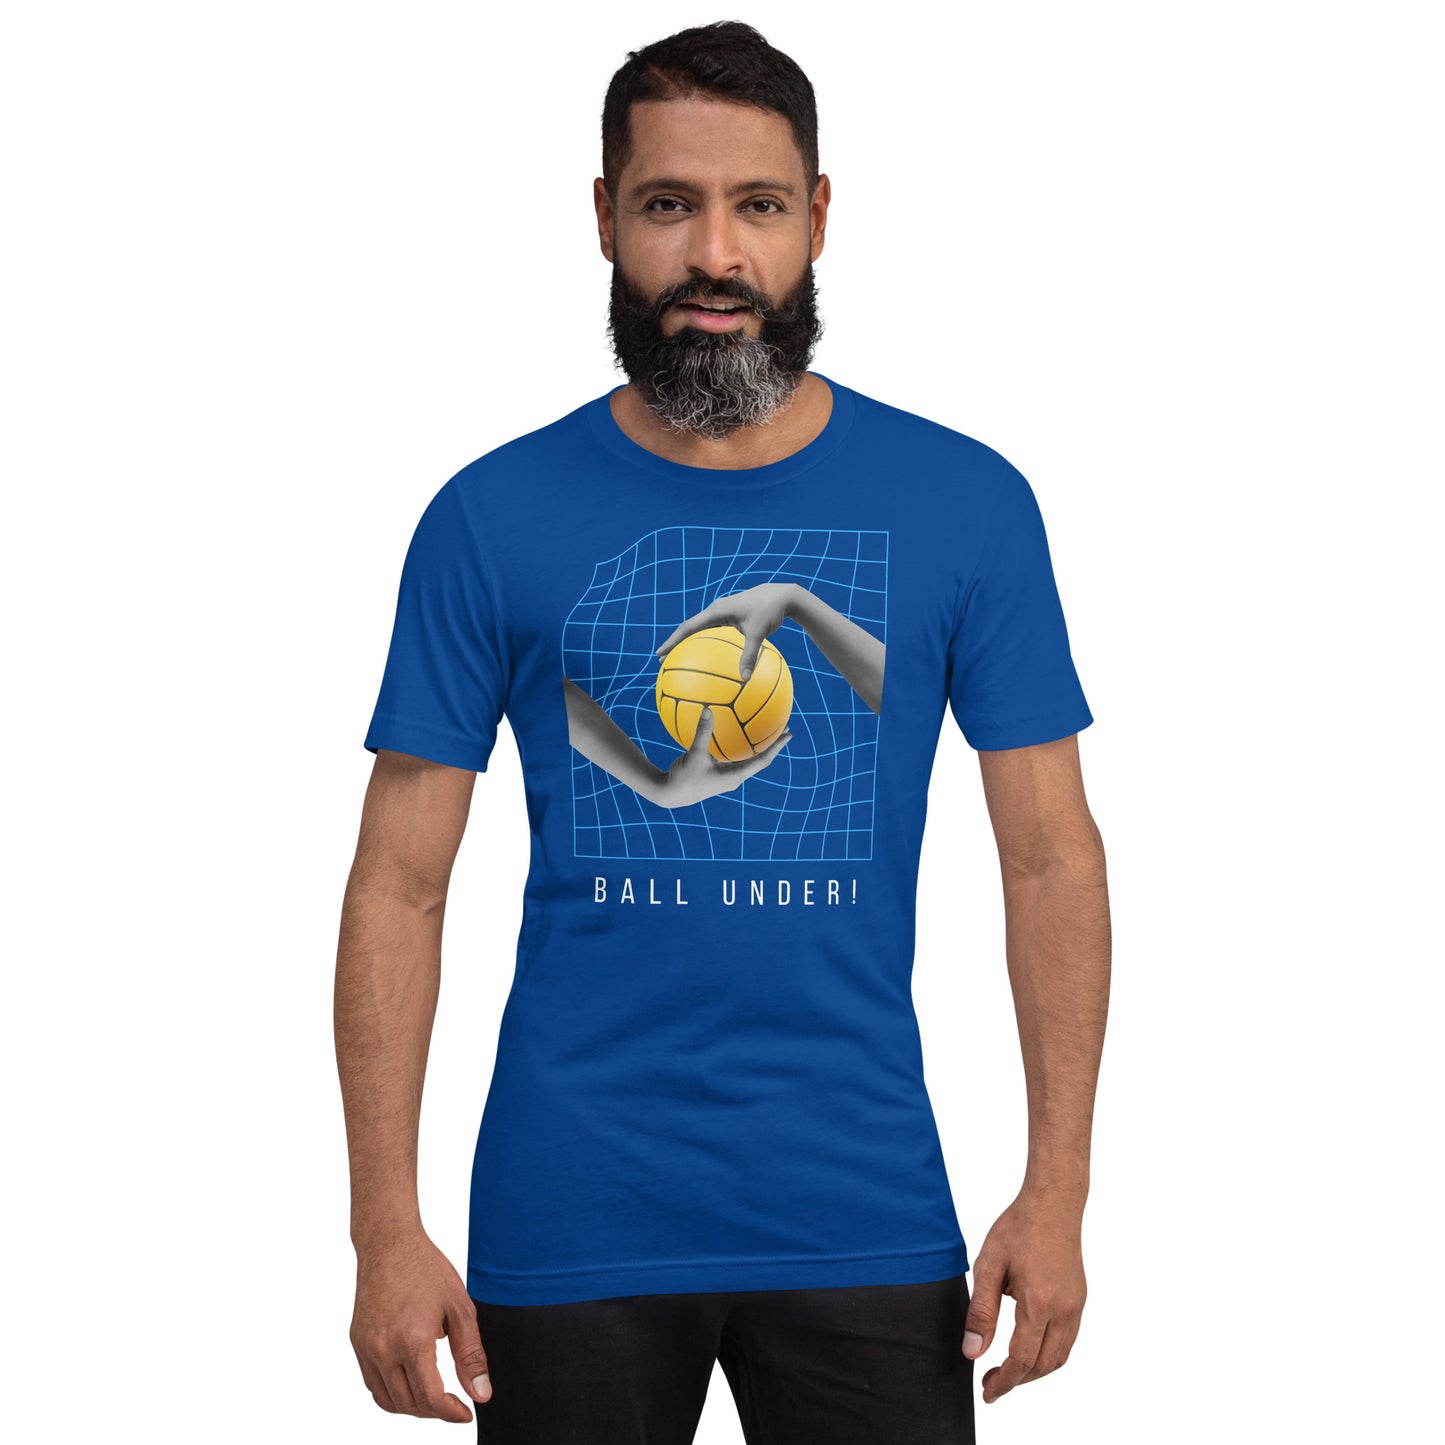 Ball Under! - Unisex Soft T-shirt - Bella Canvas 3001